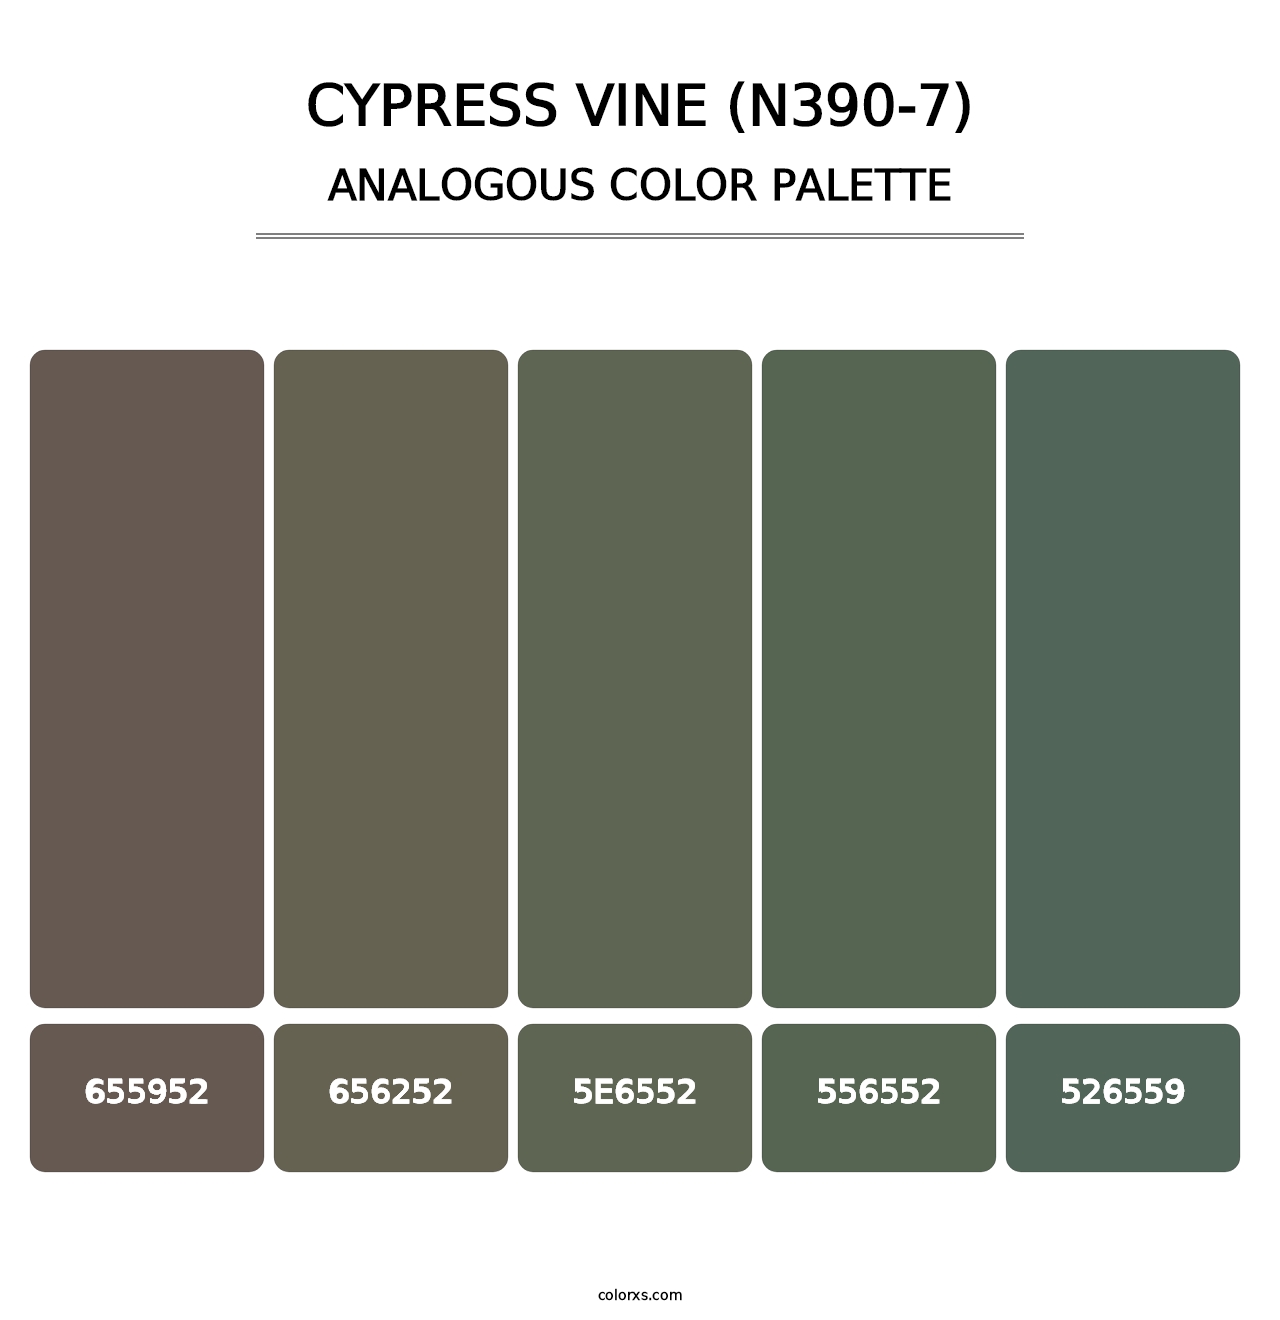 Cypress Vine (N390-7) - Analogous Color Palette